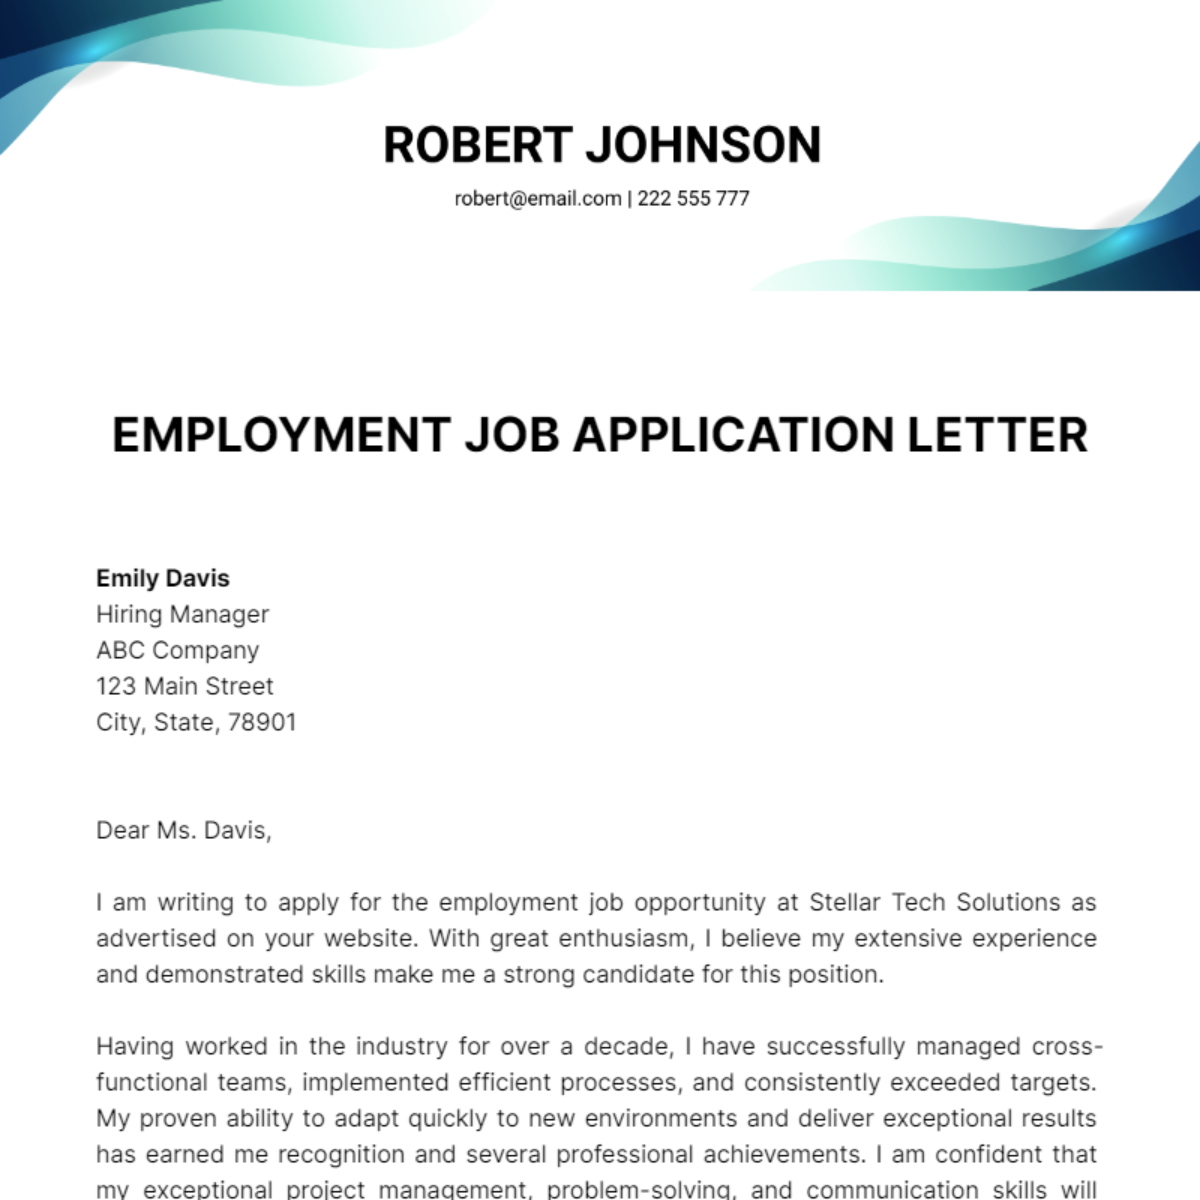 Employment Job Application Letter  Template